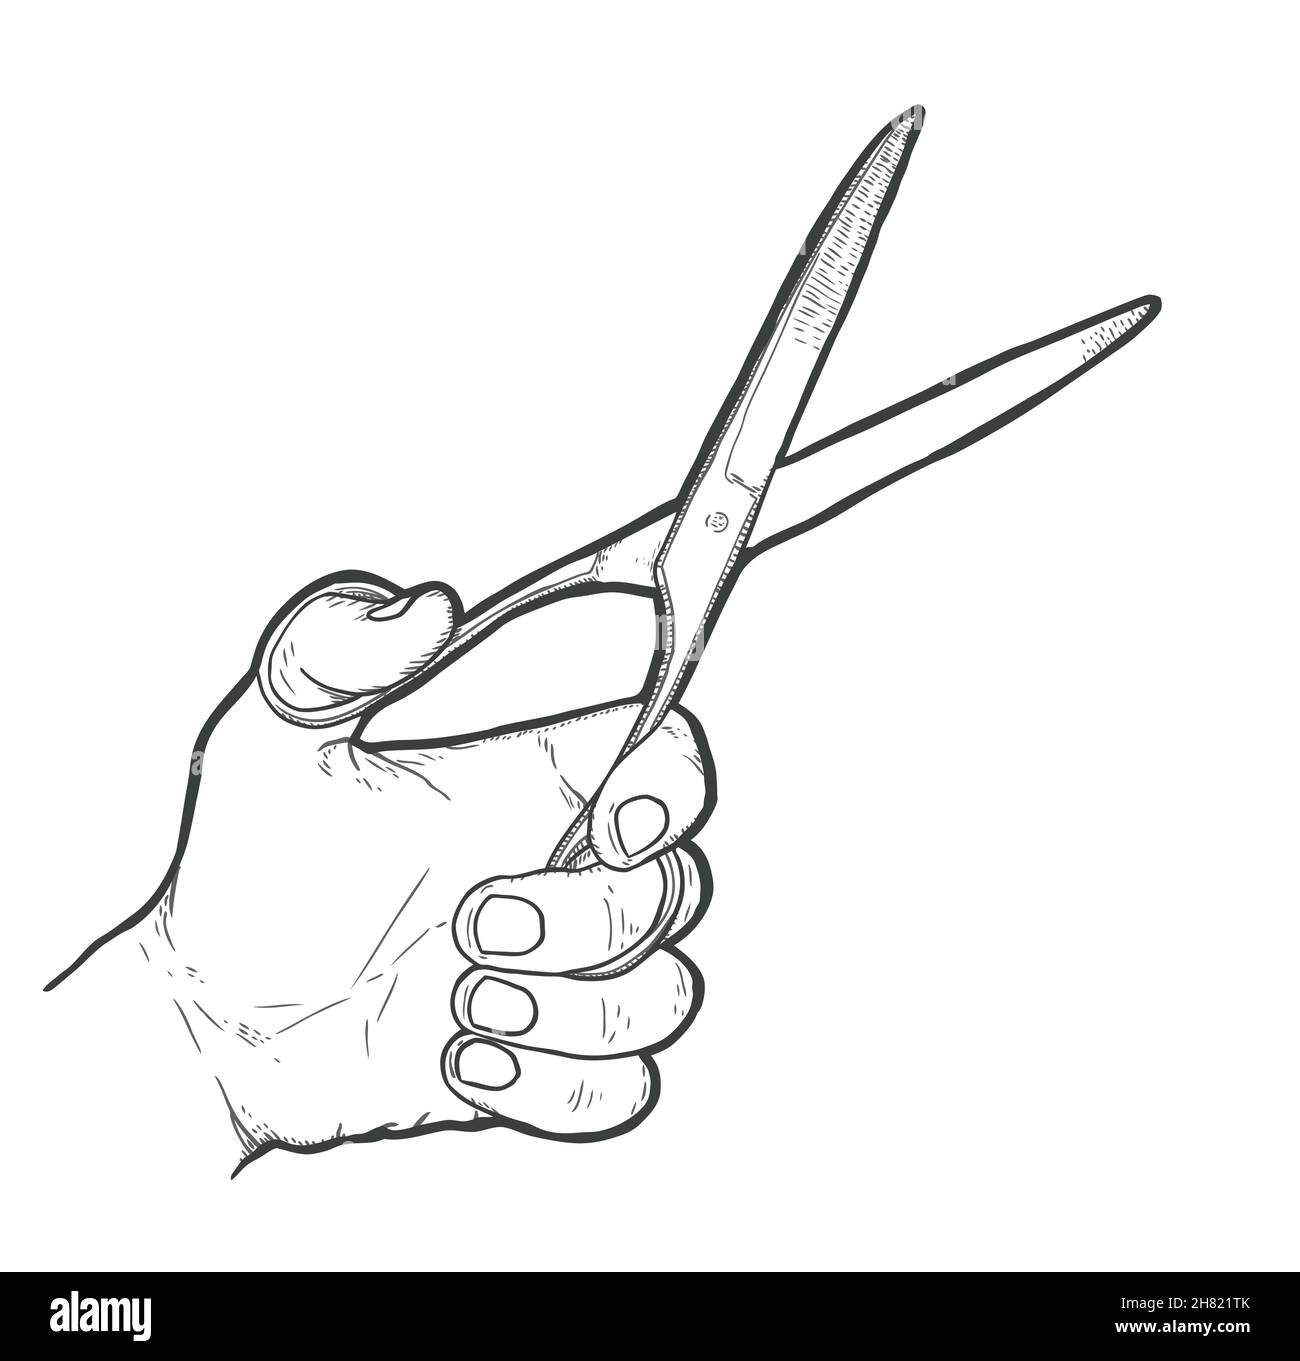 Hand drawn hand with scissors, vector illustration Stock Vector Image & Art  - Alamy